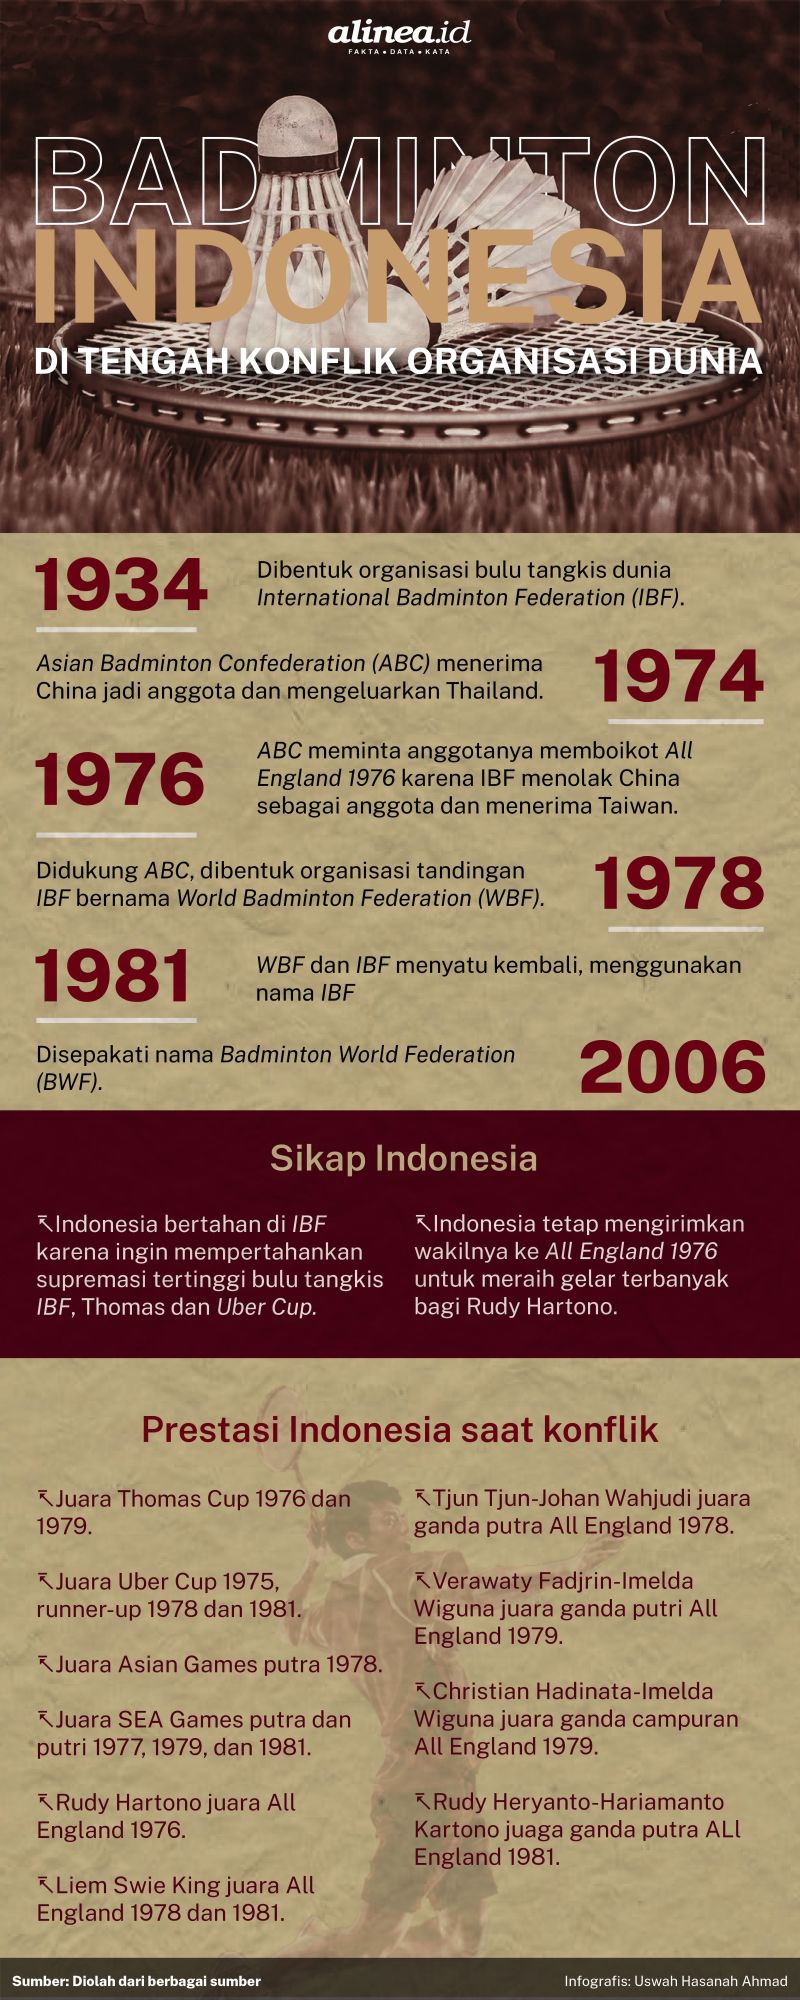 Infografik Alinea.id/Uswah Hasanah Ahmad.